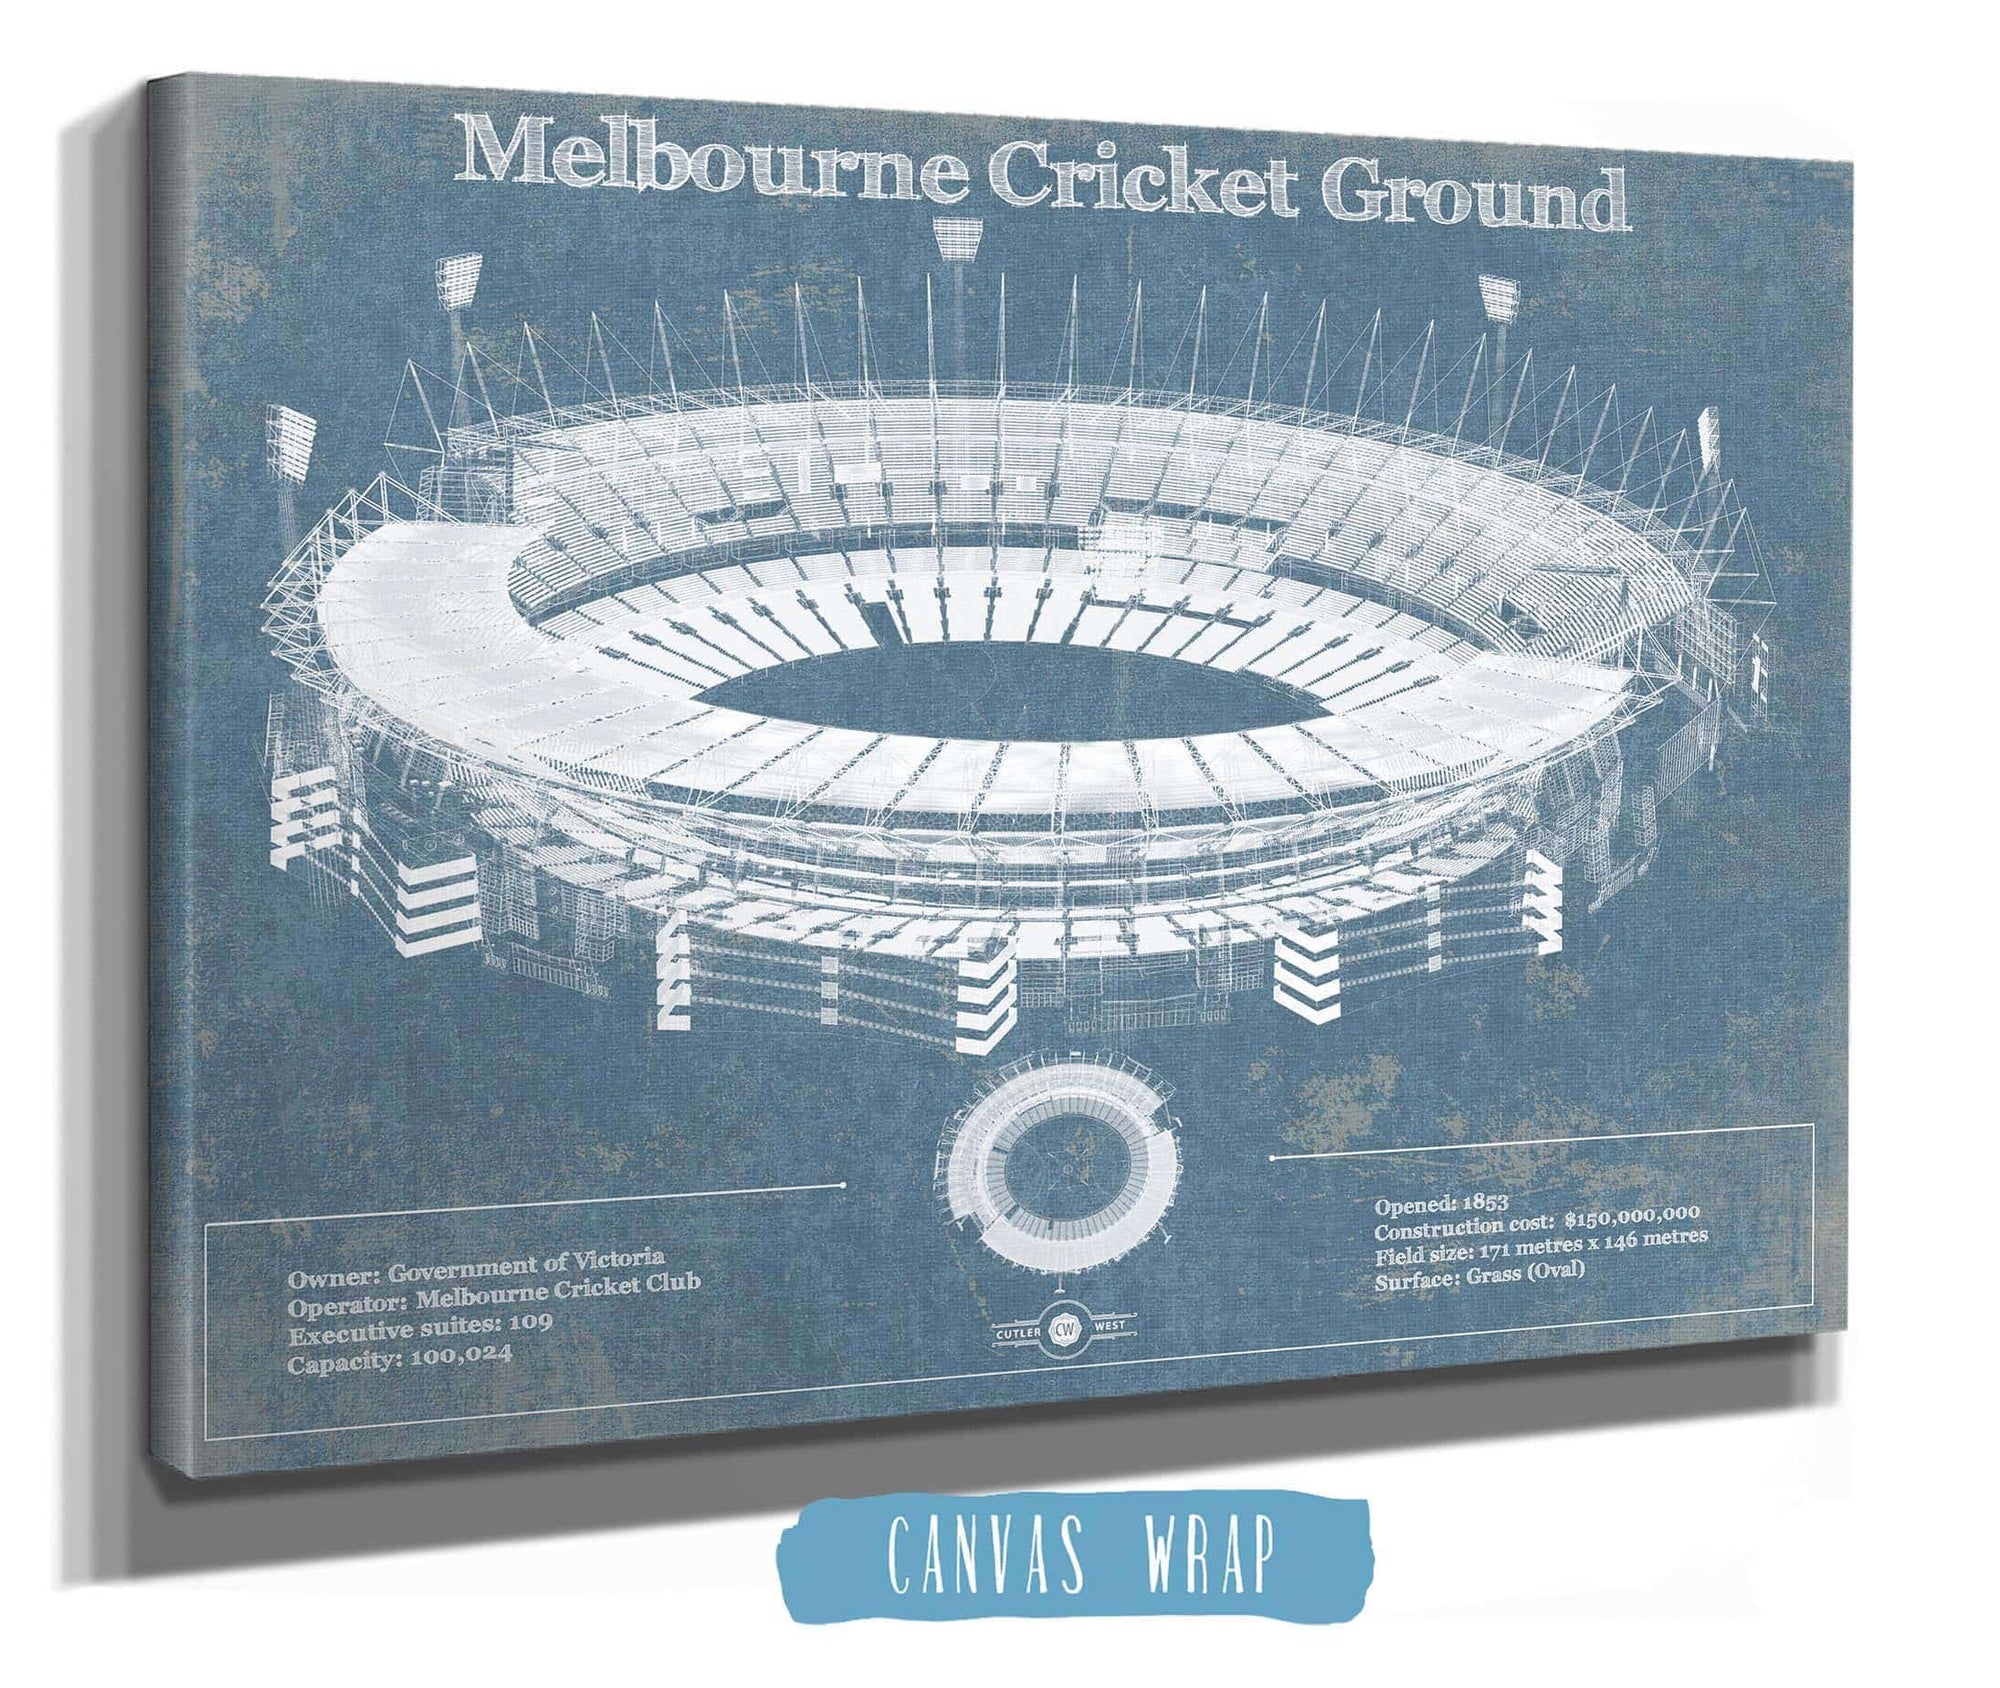 Cutler West Melbourne Cricket Ground Vintage Australian Football AFL Stadium Print